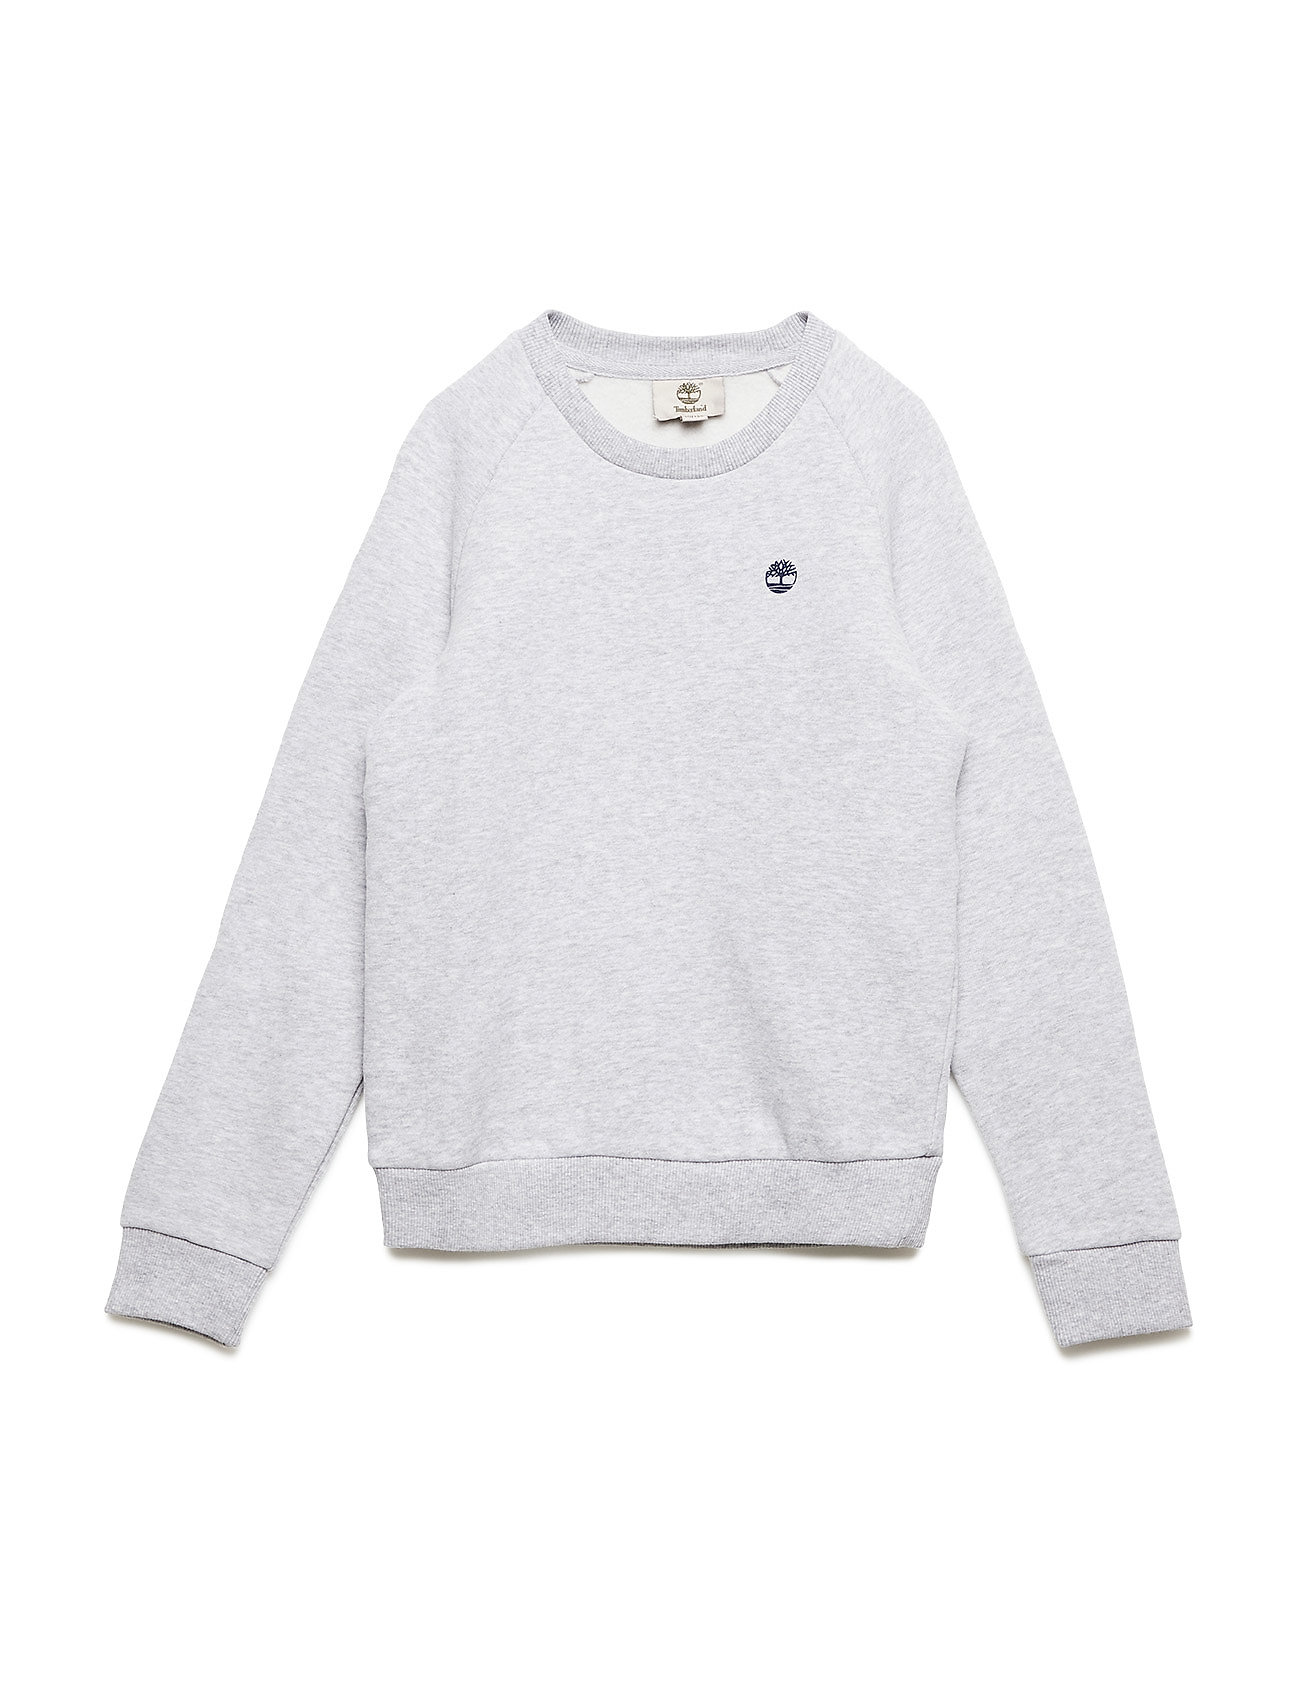 timberland grey sweatshirt